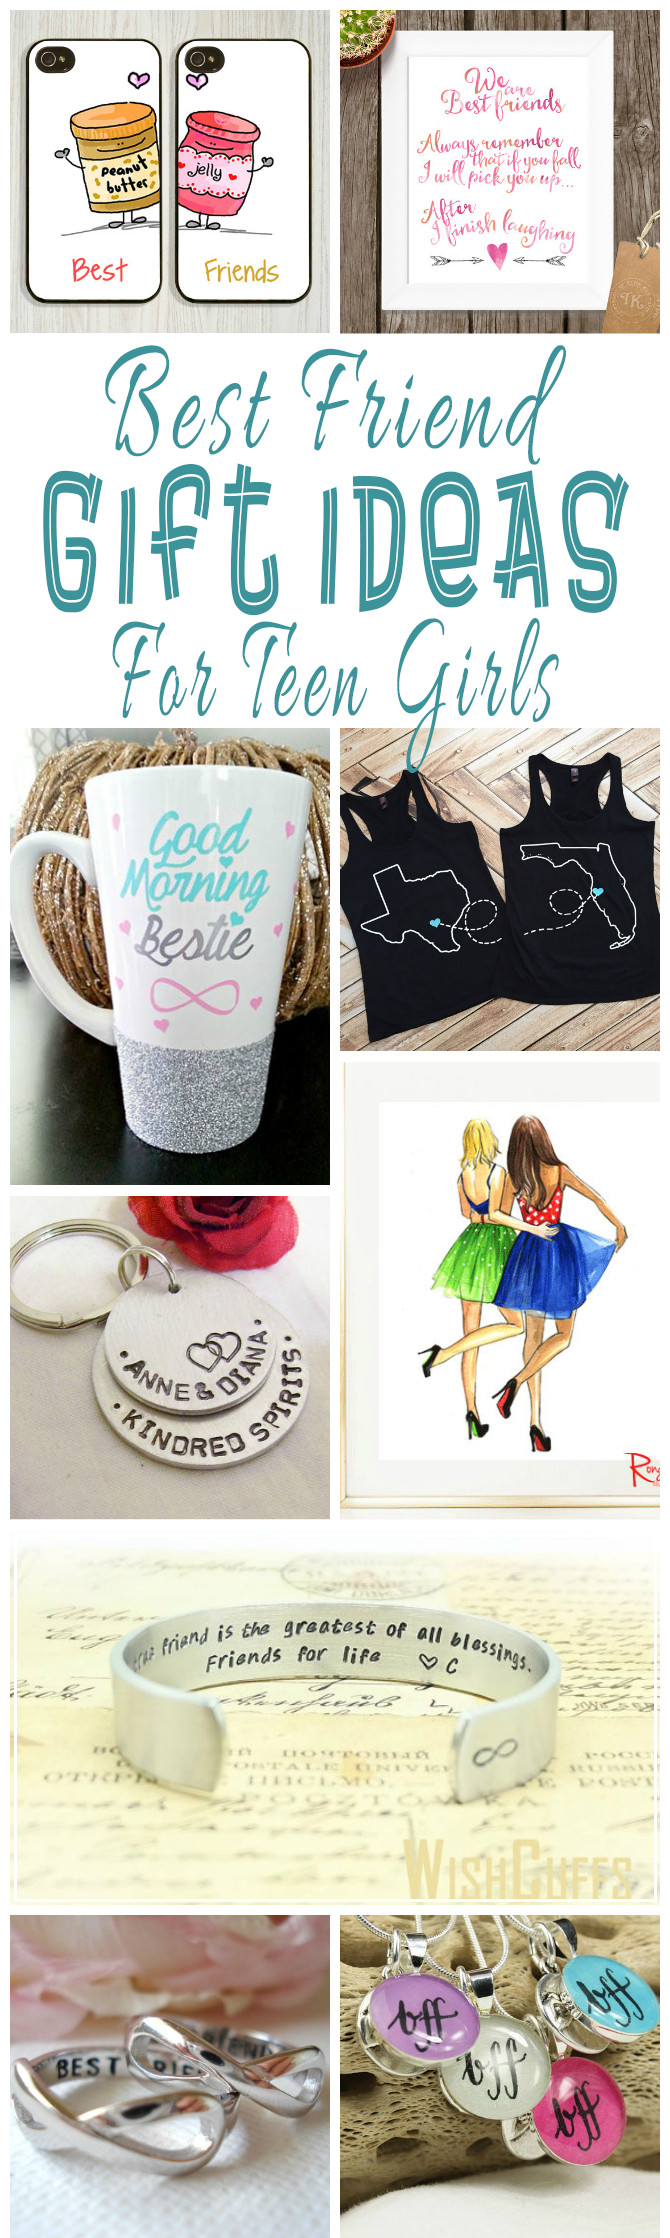 Birthday Gift Ideas For Girl Best Friend
 Best Friend Gift Ideas For Teens